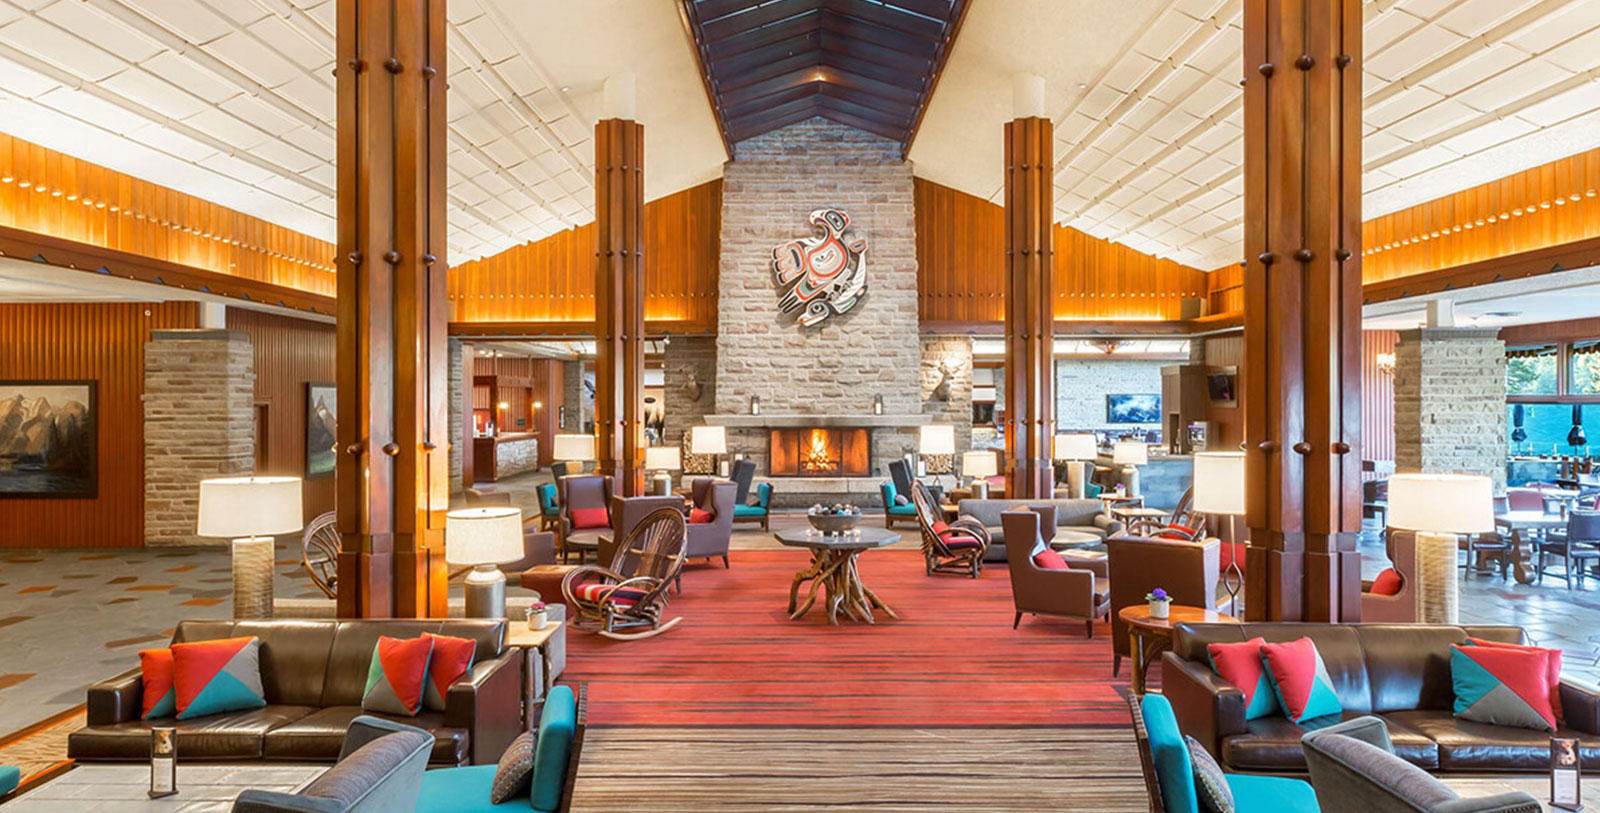 Discover the Fairmont Jasper Park Lodge’s amazing cultural heritage.